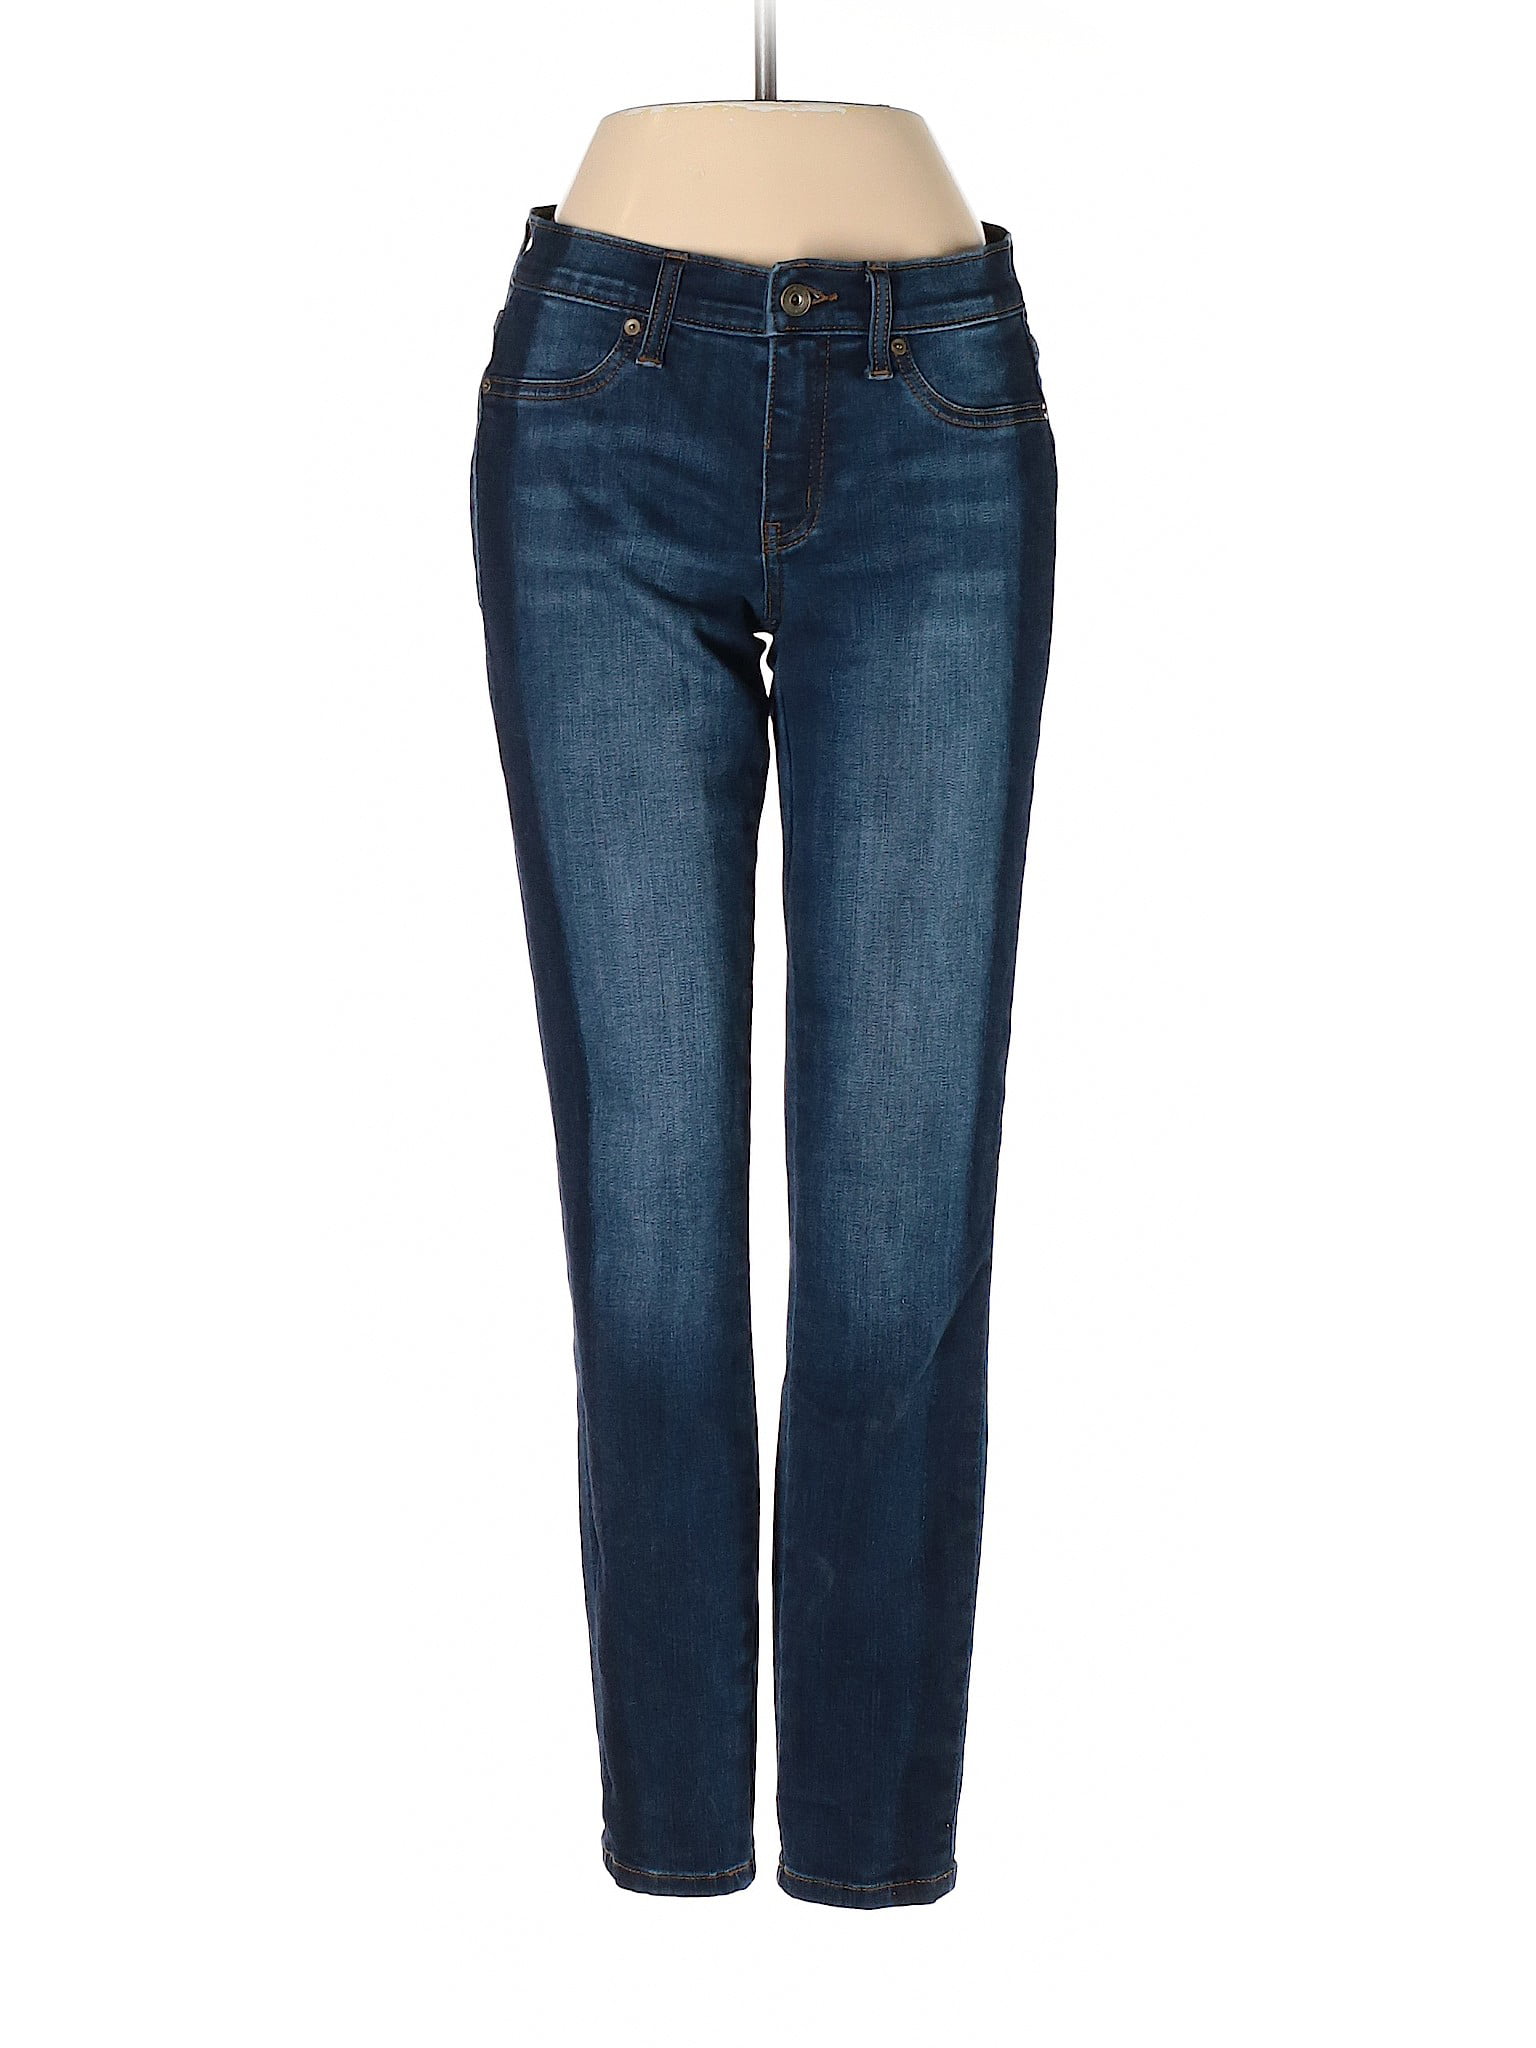 Lila Ryan - Pre-Owned Lila Ryan Women's Size 27W Jeans - Walmart.com ...